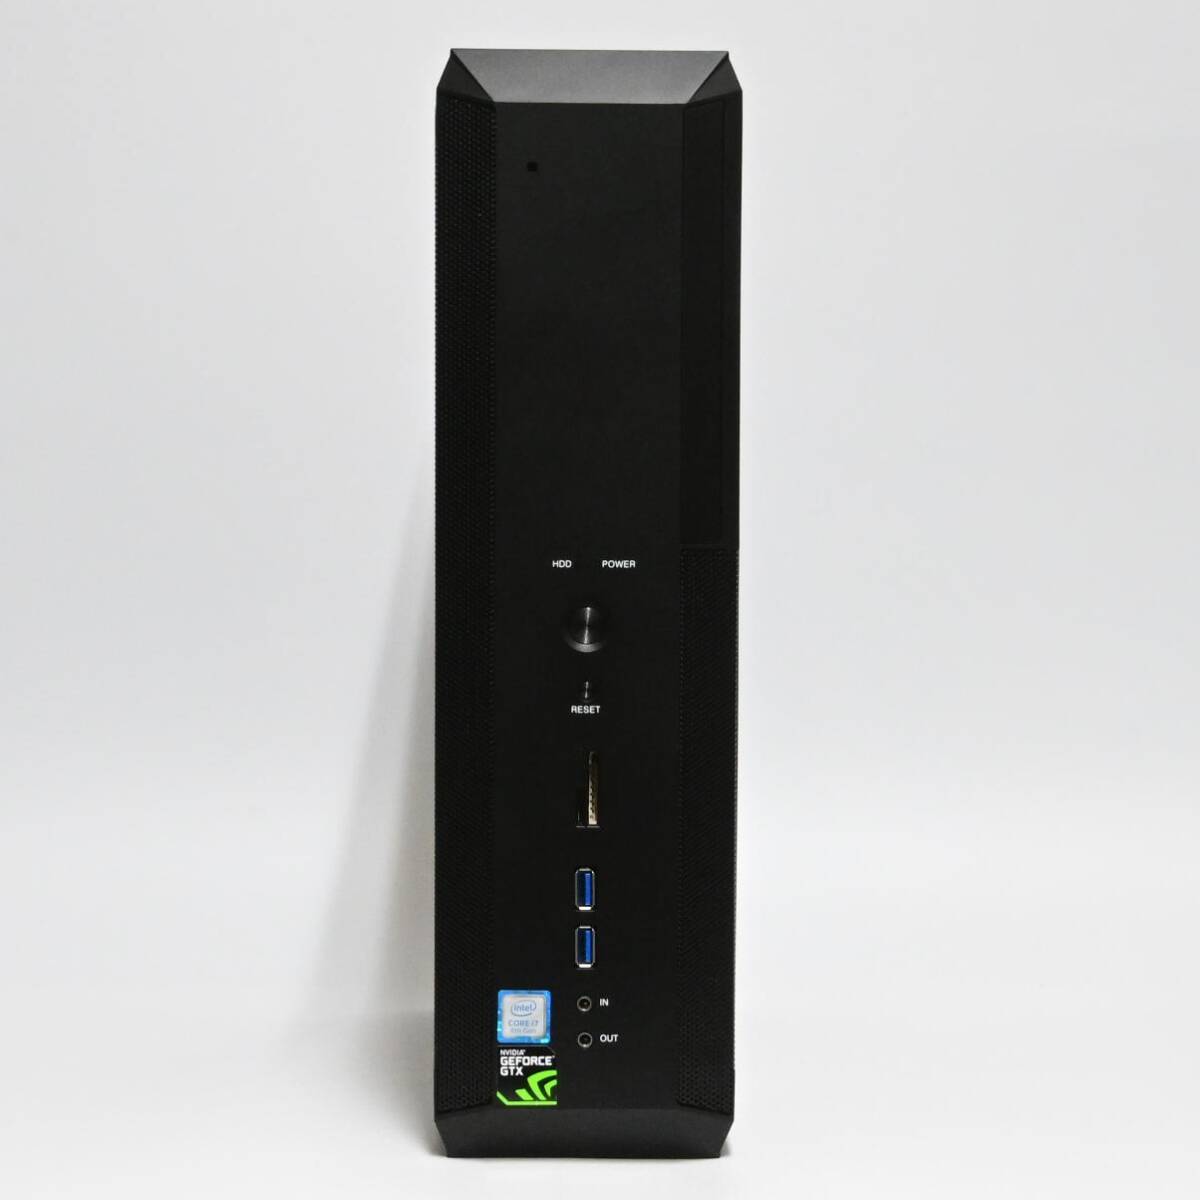  гарантия работы *PC кейс Mini-ITX SilverStone GALLERIA тонкий tower USB3.0*029